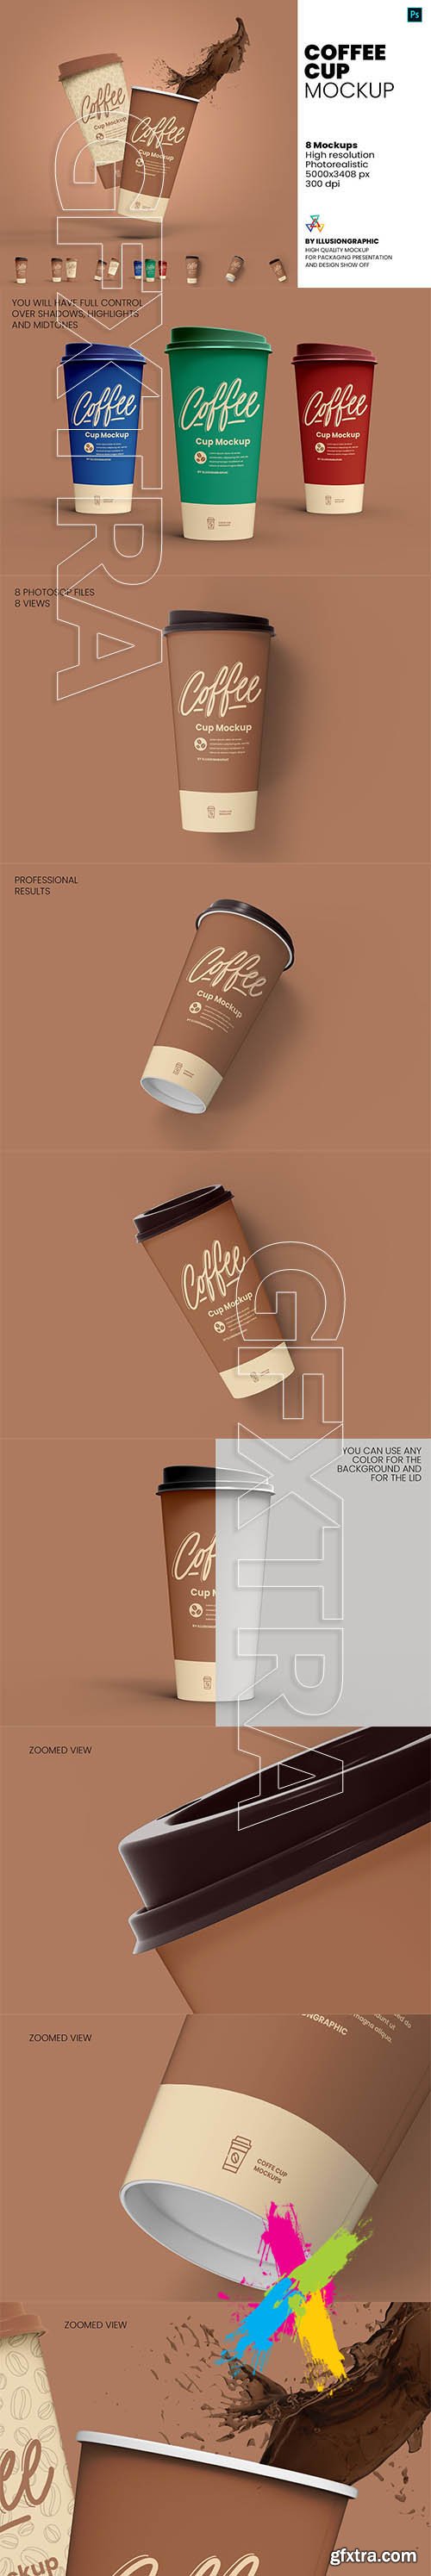 CreativeMarket - Coffee Cup Mockup - 8 views 5876160